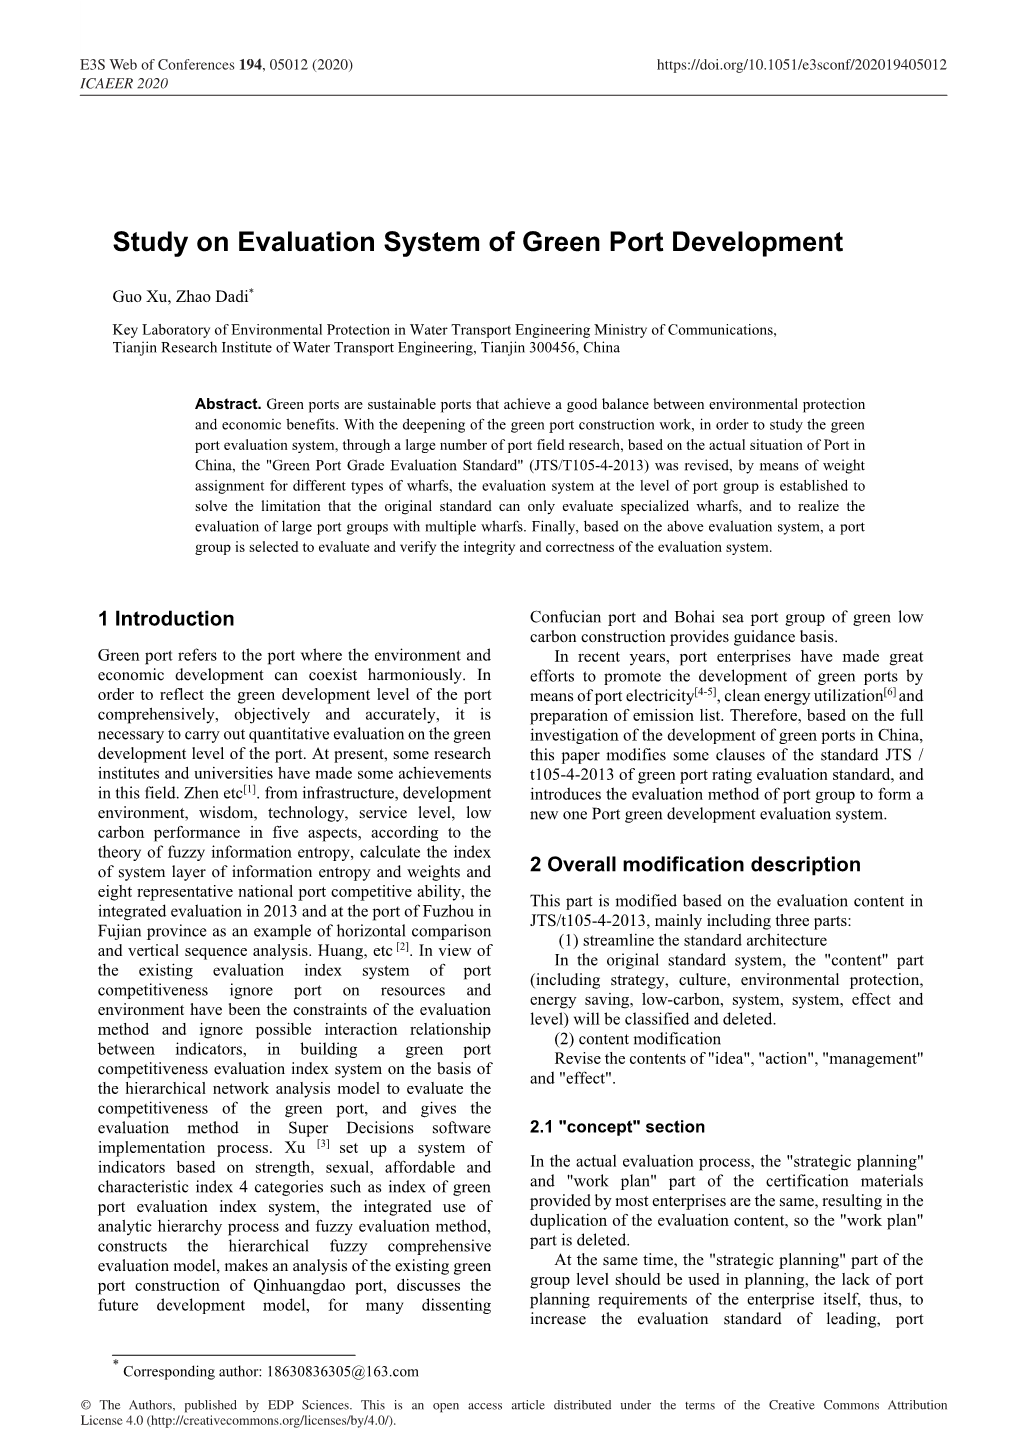 Study on Evaluation System of Green Port Development